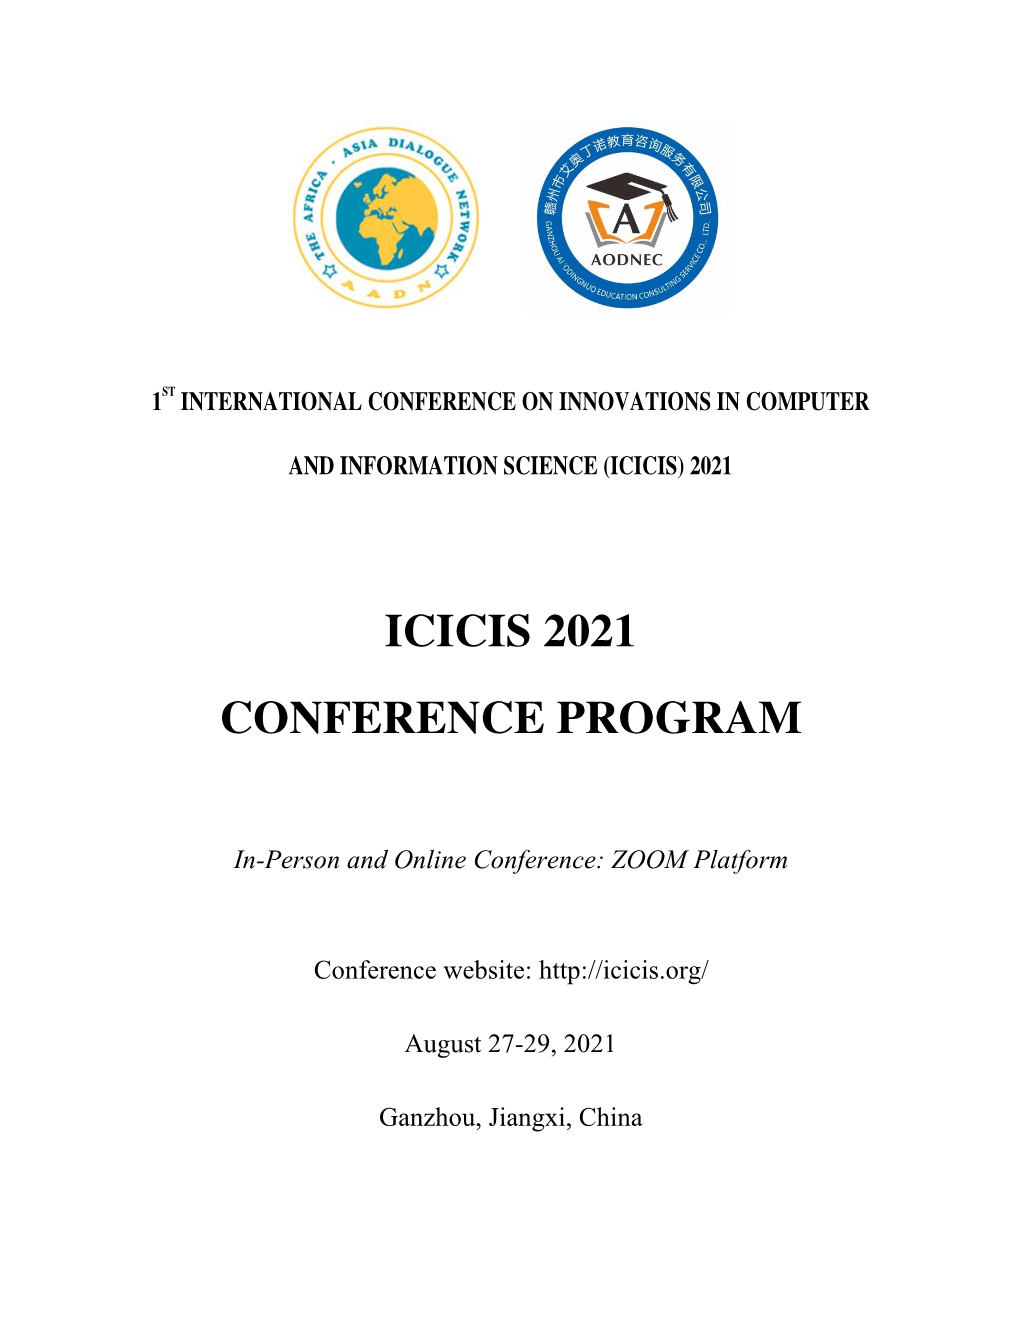 Icicis 2021 Conference Program